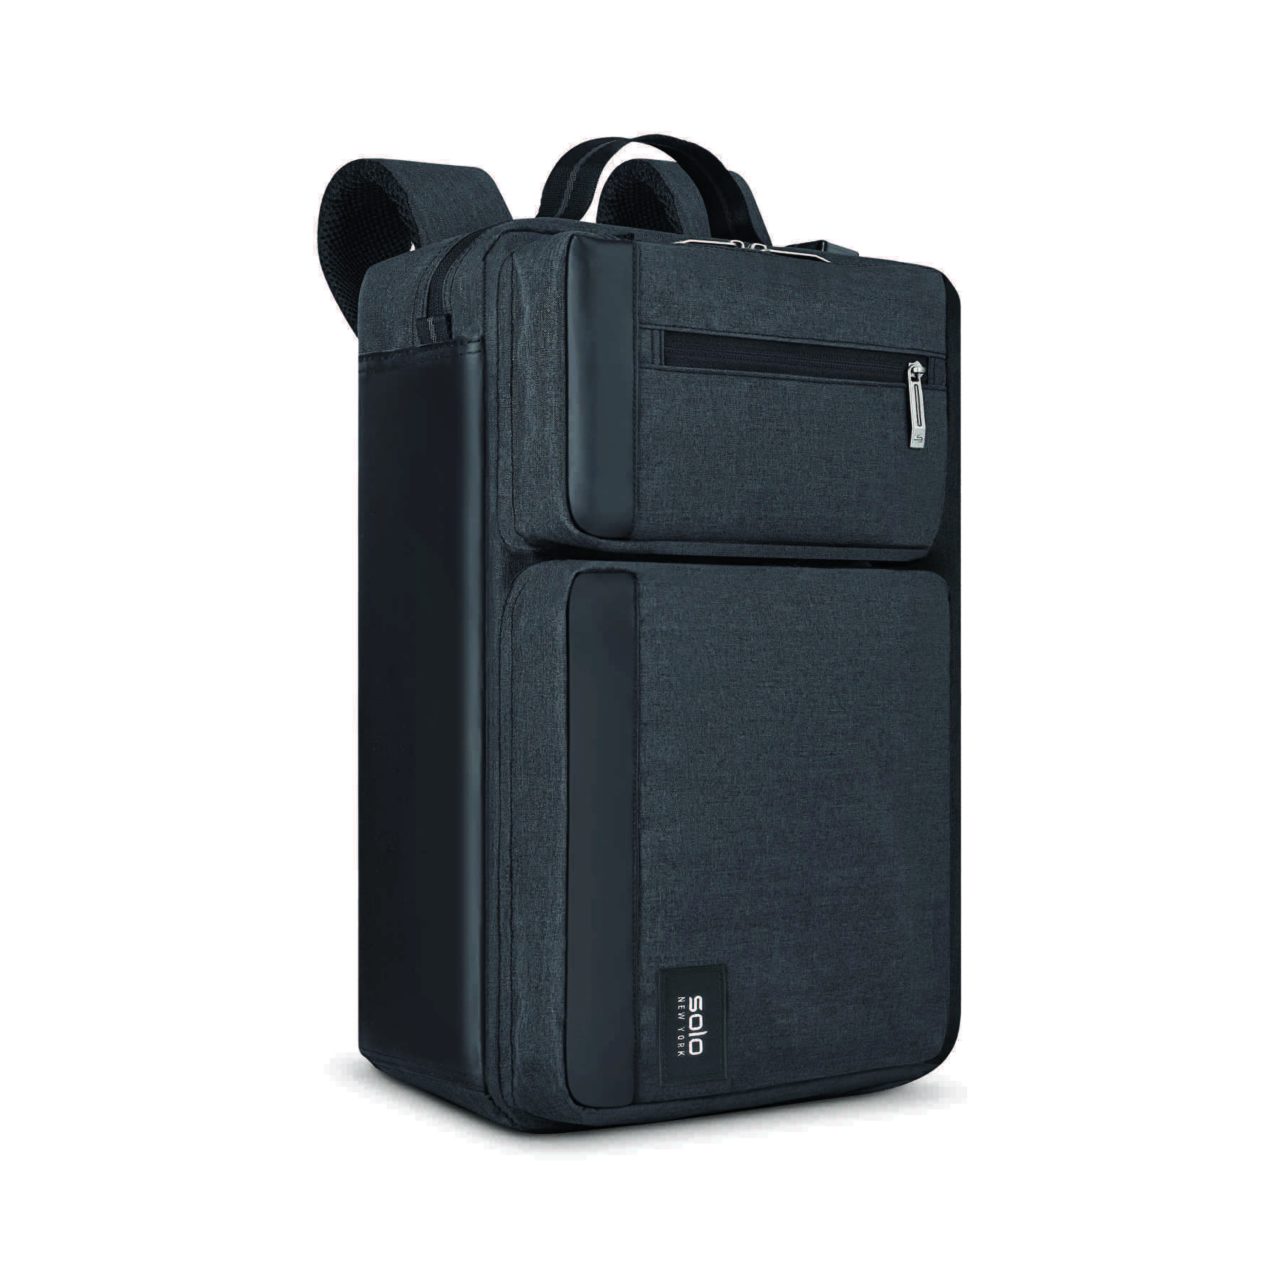 Solo Duane 15.6 Inch Laptop Hybrid Briefcase